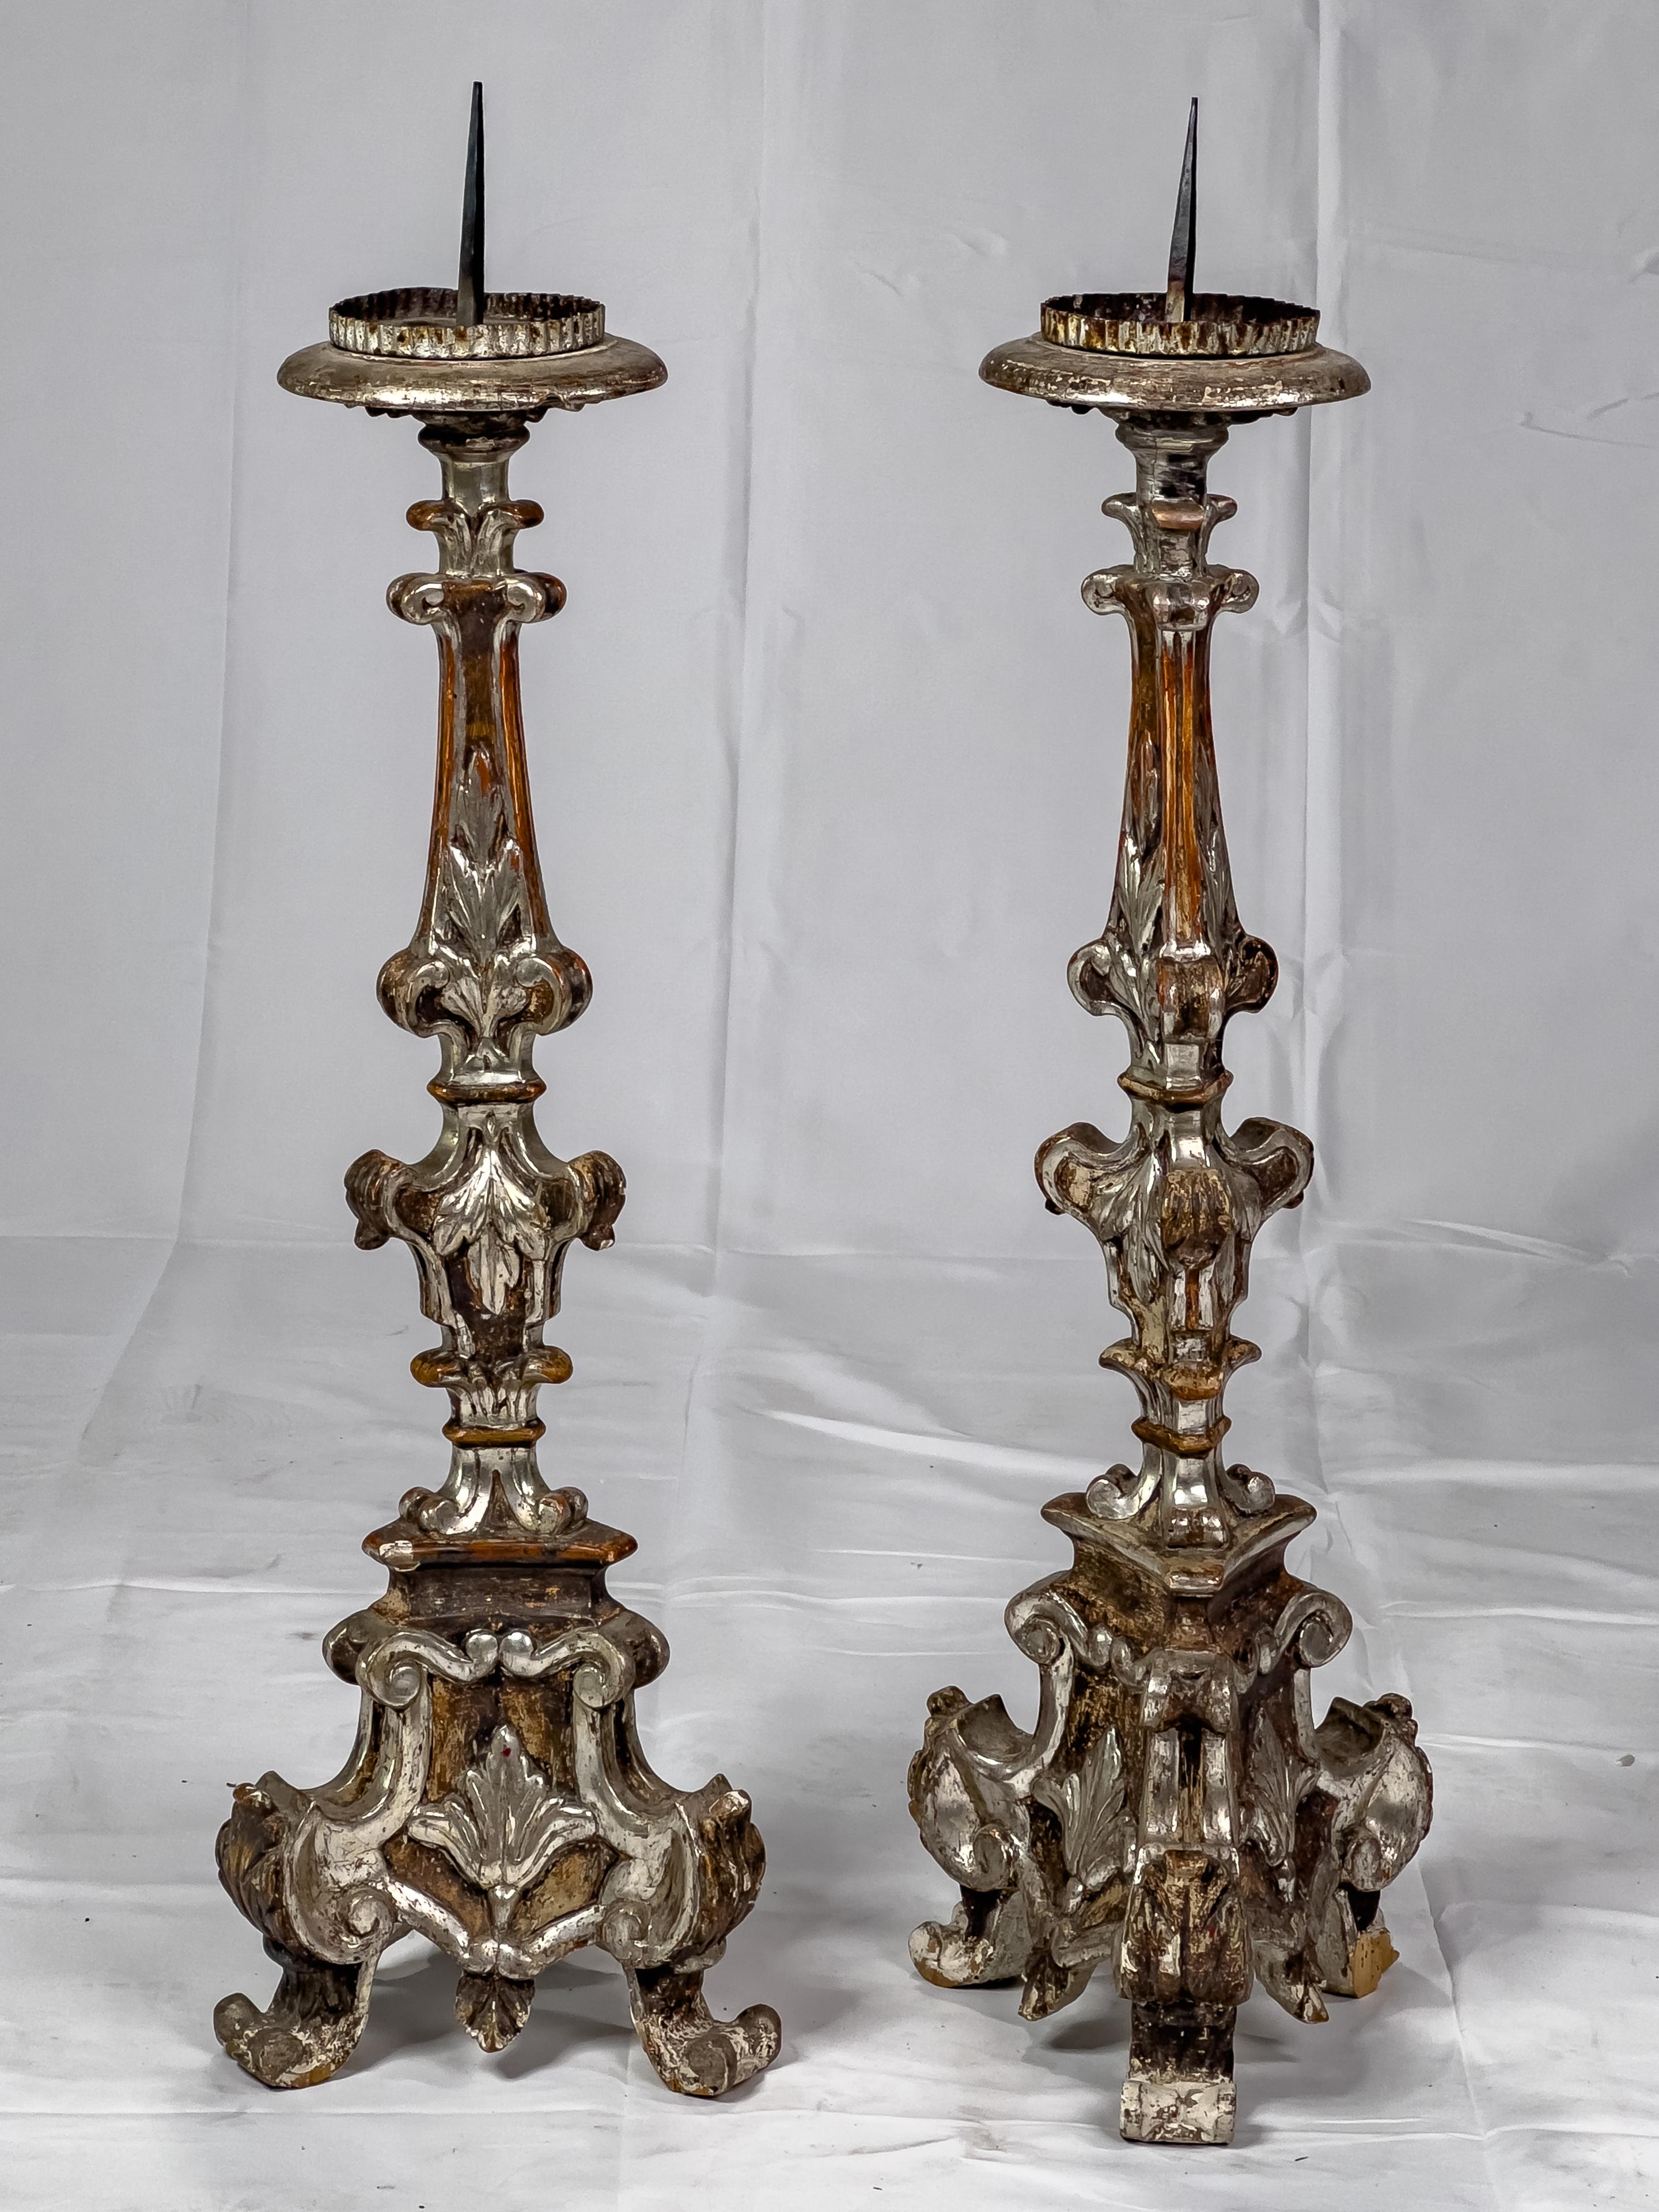 Pair of Tall Italian Baroque style silver gilt 19th c. pricket Candlesticks. Originally made for an Italian church.